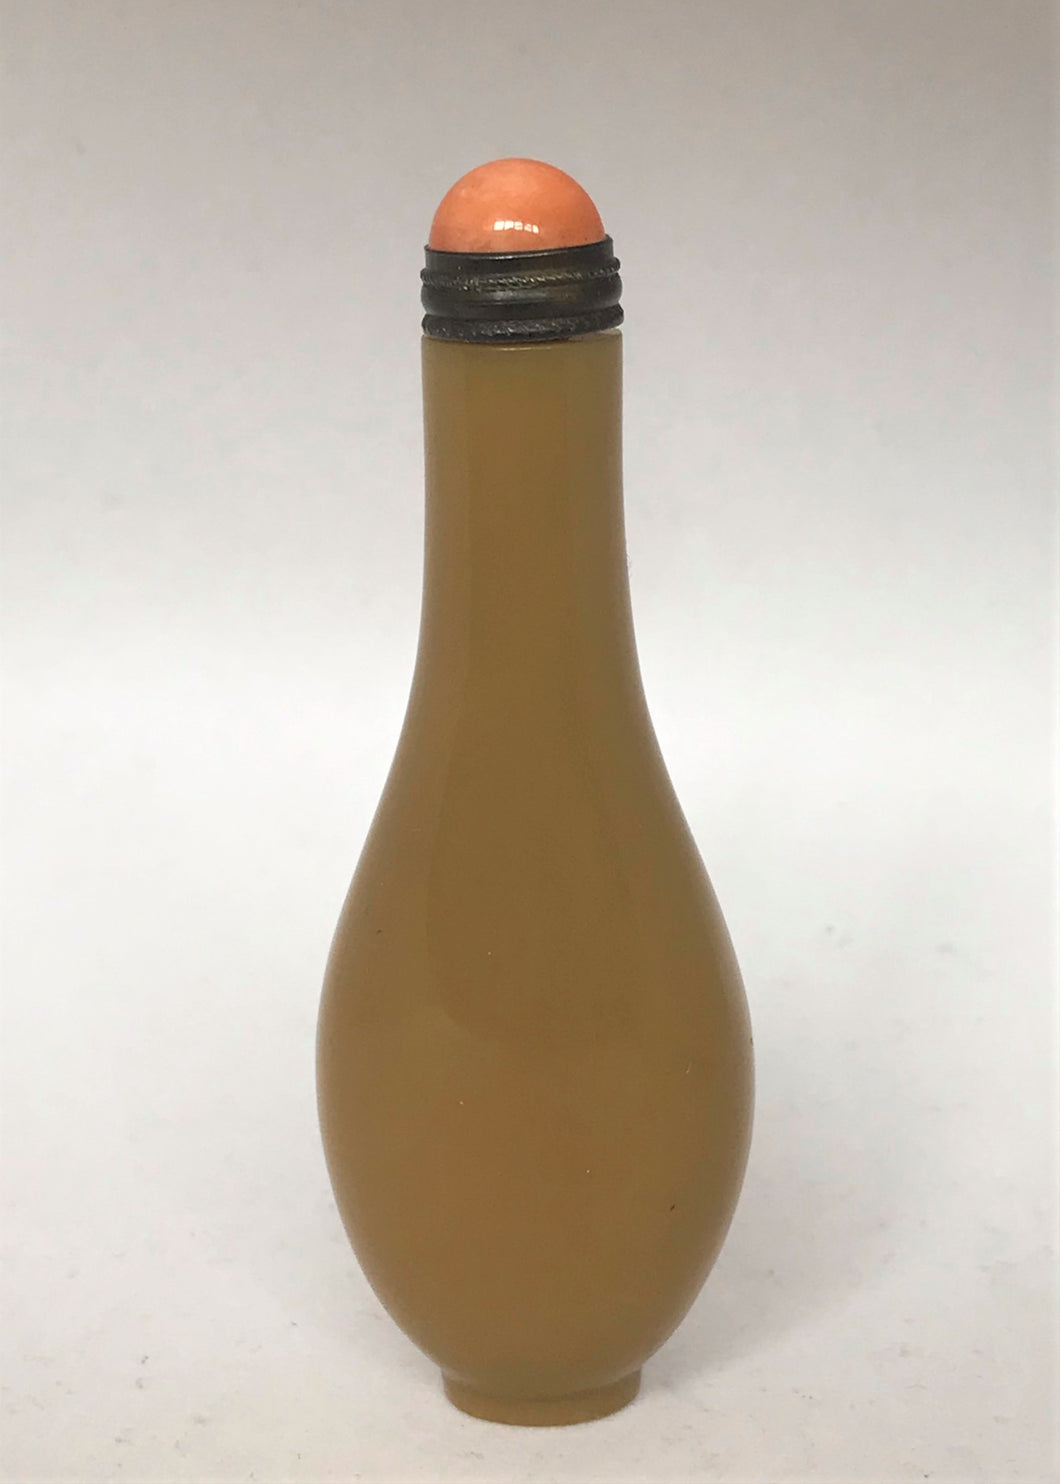 Snuff Bottle: Antique Beijing Mustard Yellow Glass Snuff Bottle